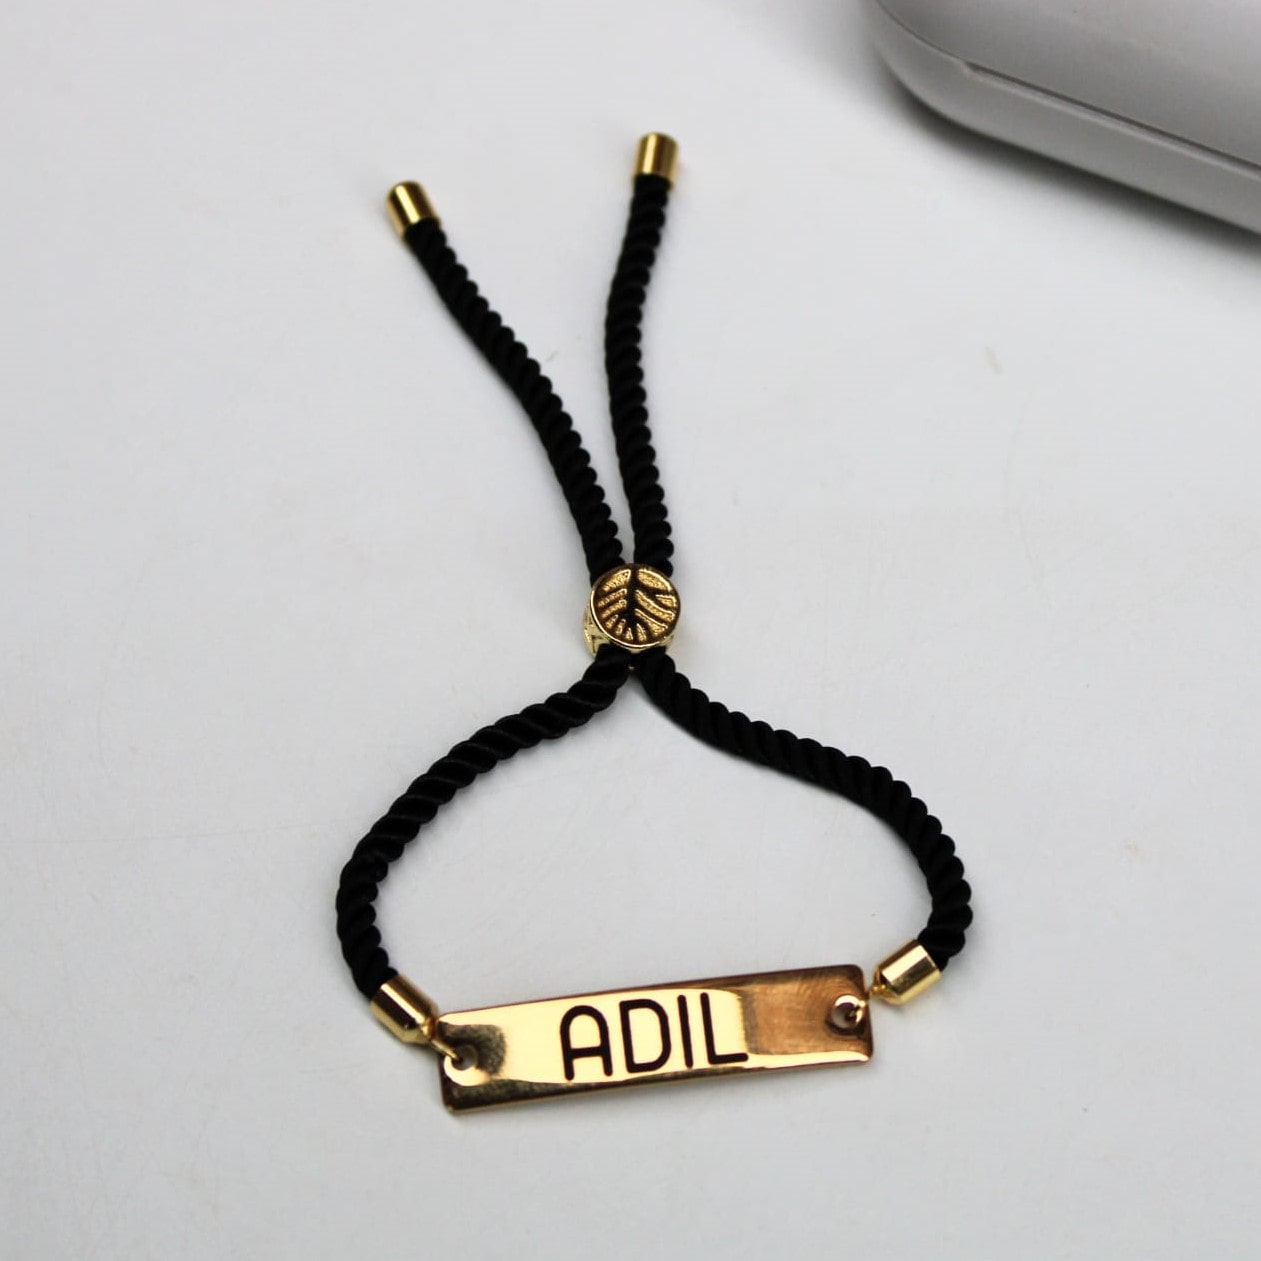 Personalized Mens Bracelet - Customized Kada - Name Bracelet